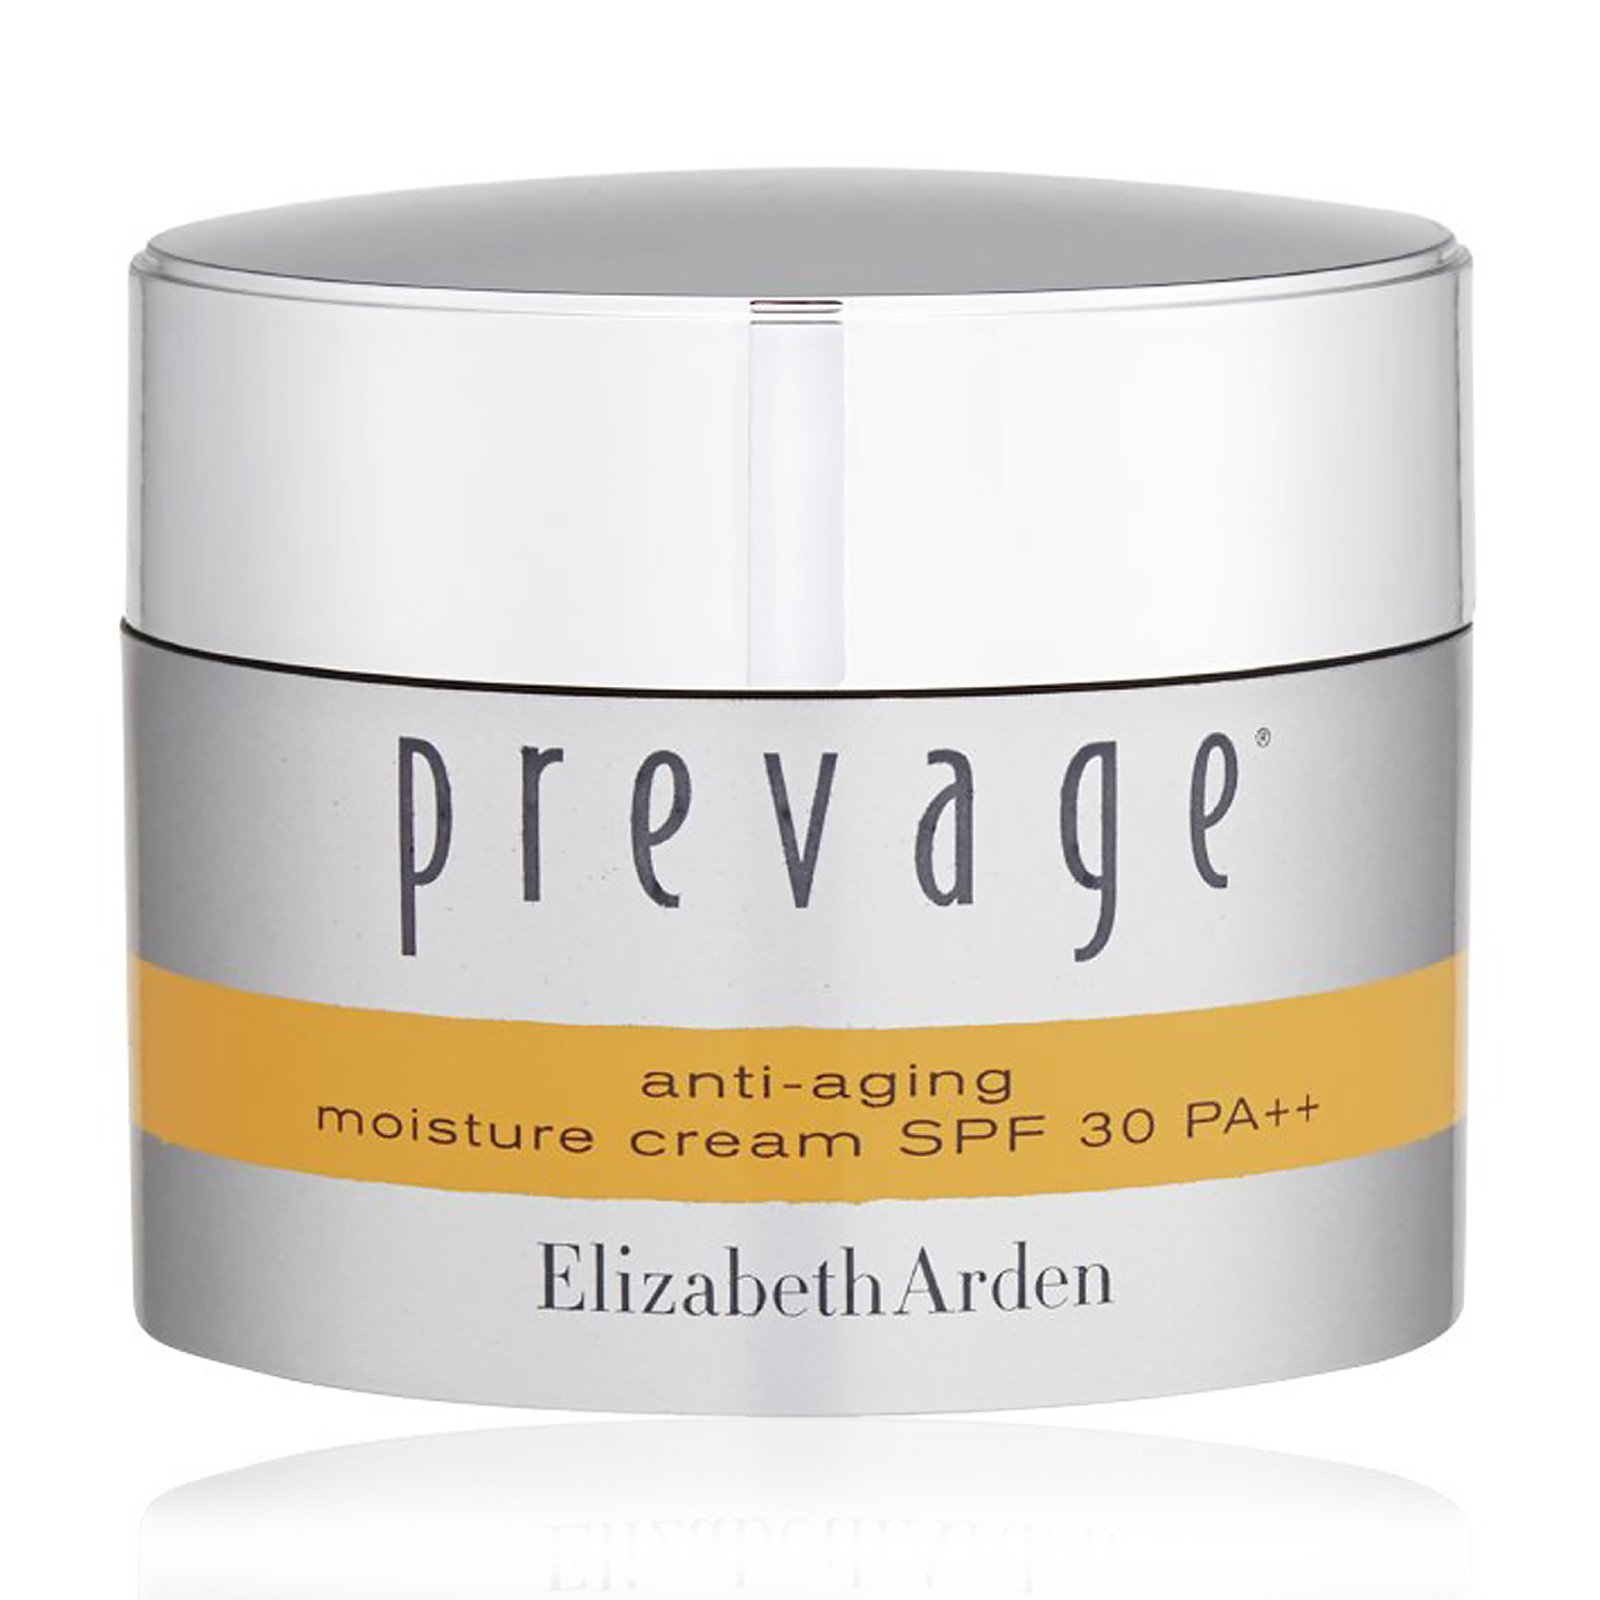 Prevage Anti-Aging Moisture Cream SPF 30 / PA++